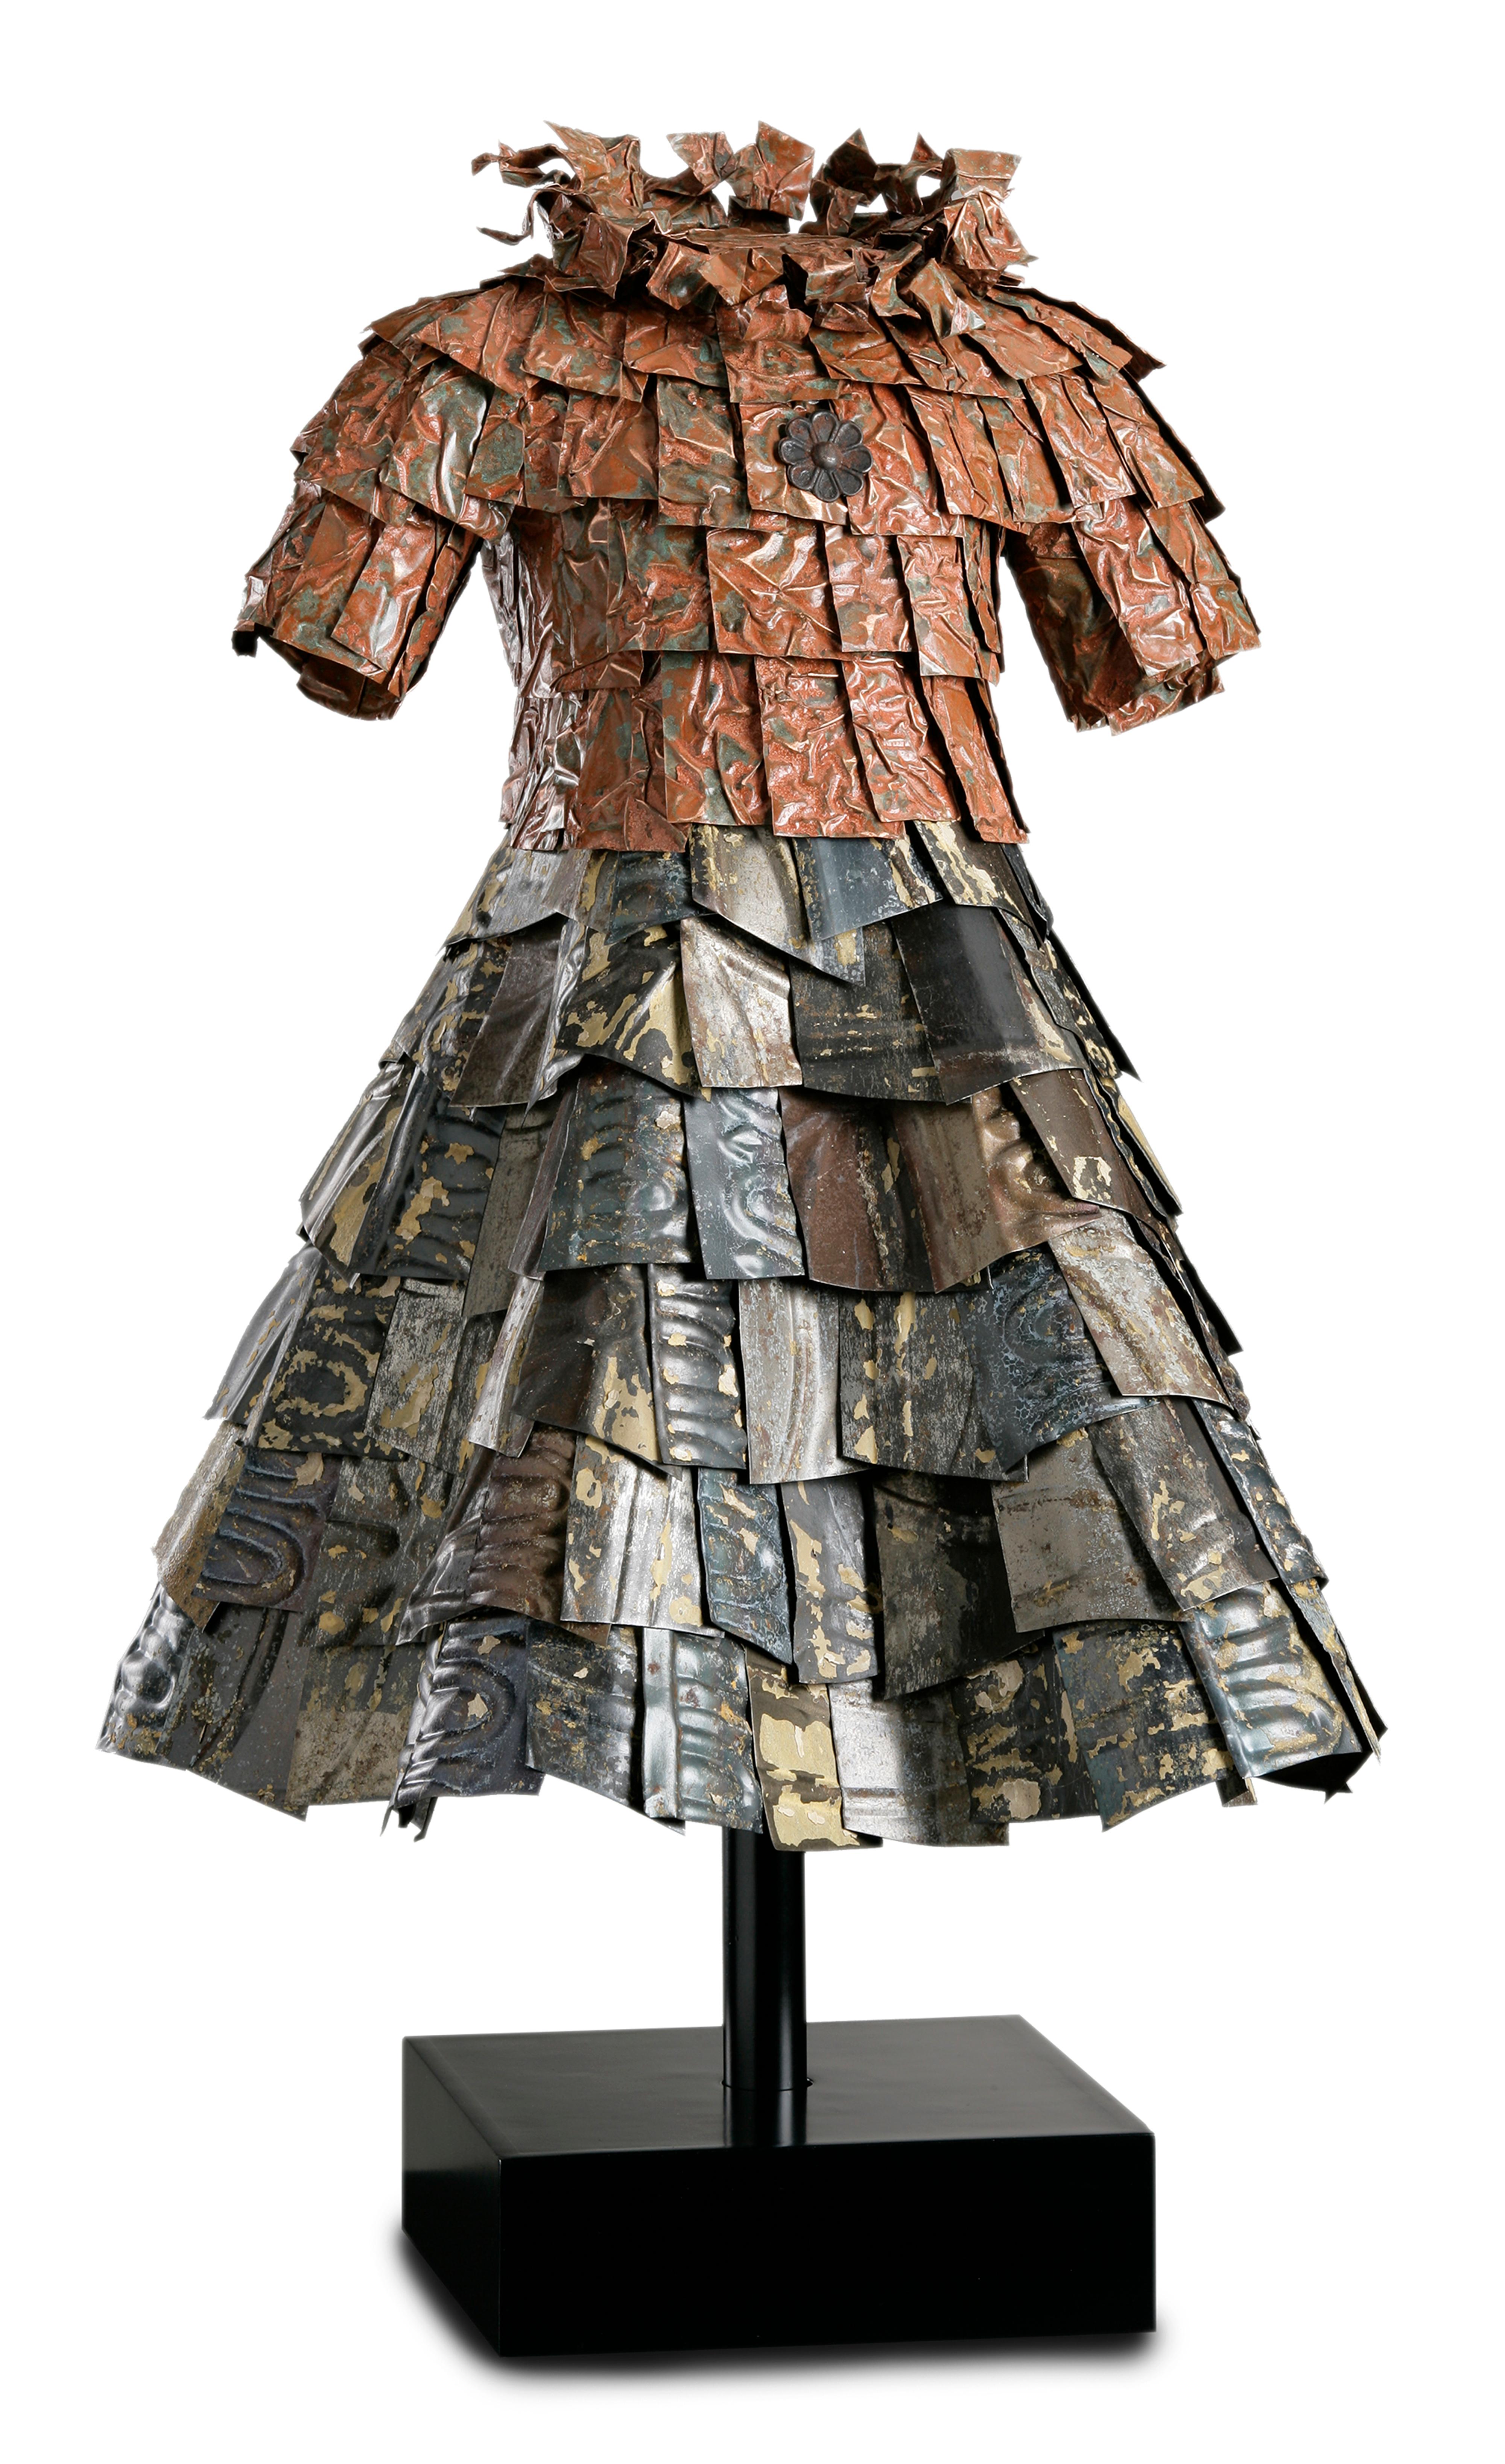 John Petrey Figurative Sculpture - 'Piper' Mixed Media, Found Object Sculpture of a Dress